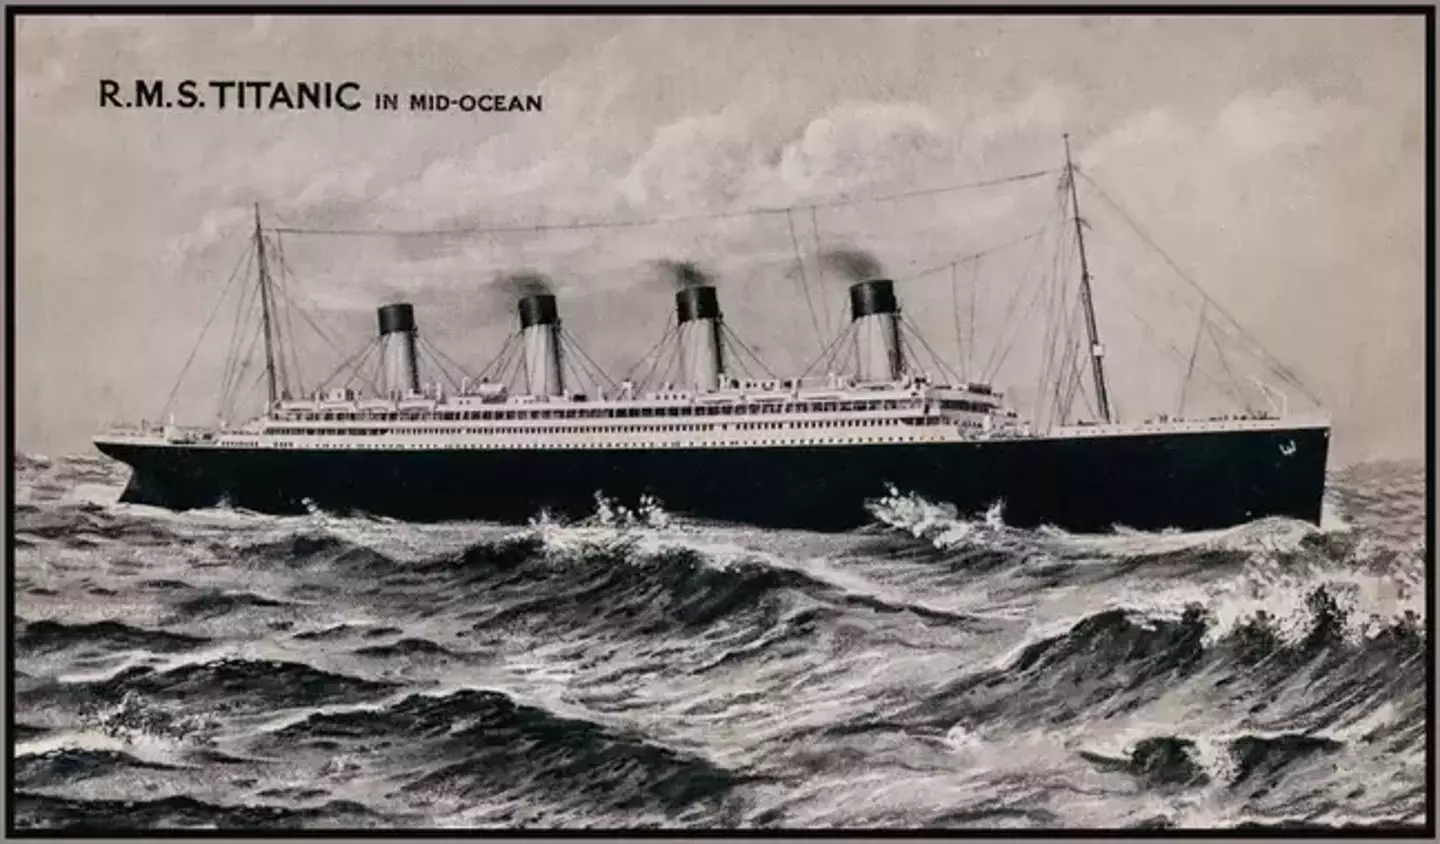 The Titanic set sail from Southampton on 10 April, 1912 and hit the iceberg on 15 April.